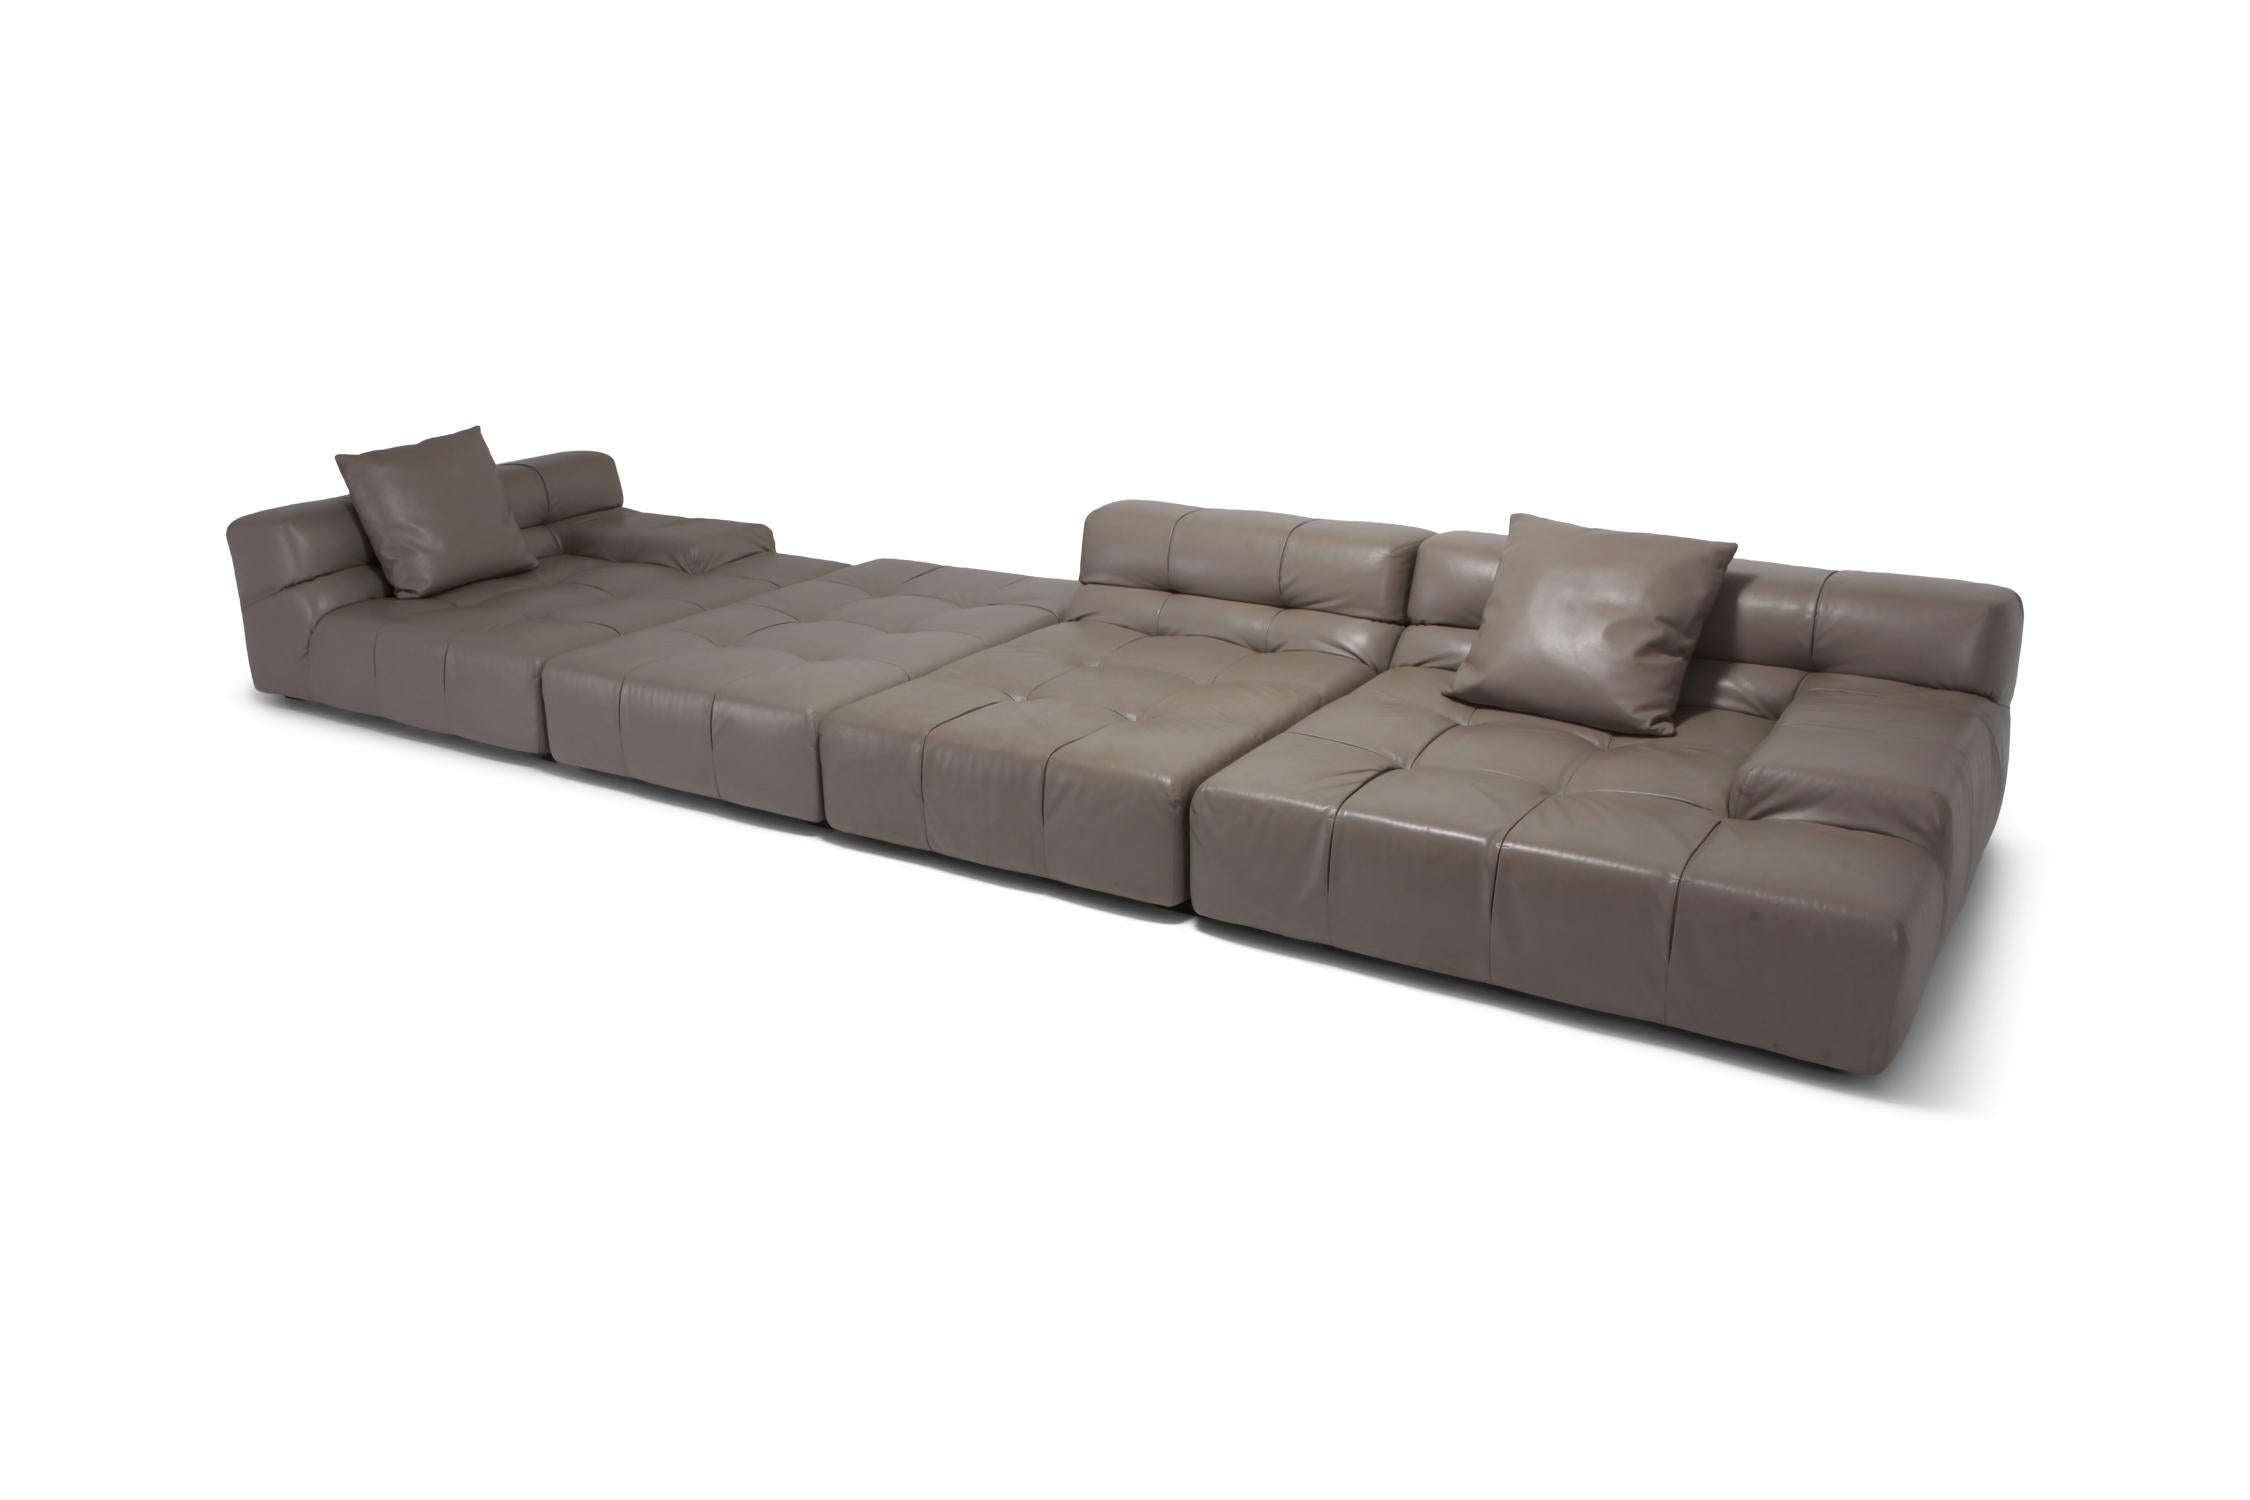 Contemporary modular sofa designed by Patricia Urquiola for BeB Italia in taupe colored leather.

Collections: B&B Italia - B&B Italia Project - Maxalto
Category: Gamma
Feature: Cowhide leather - Chrome tanning - Aniline dye - Corrected grain -